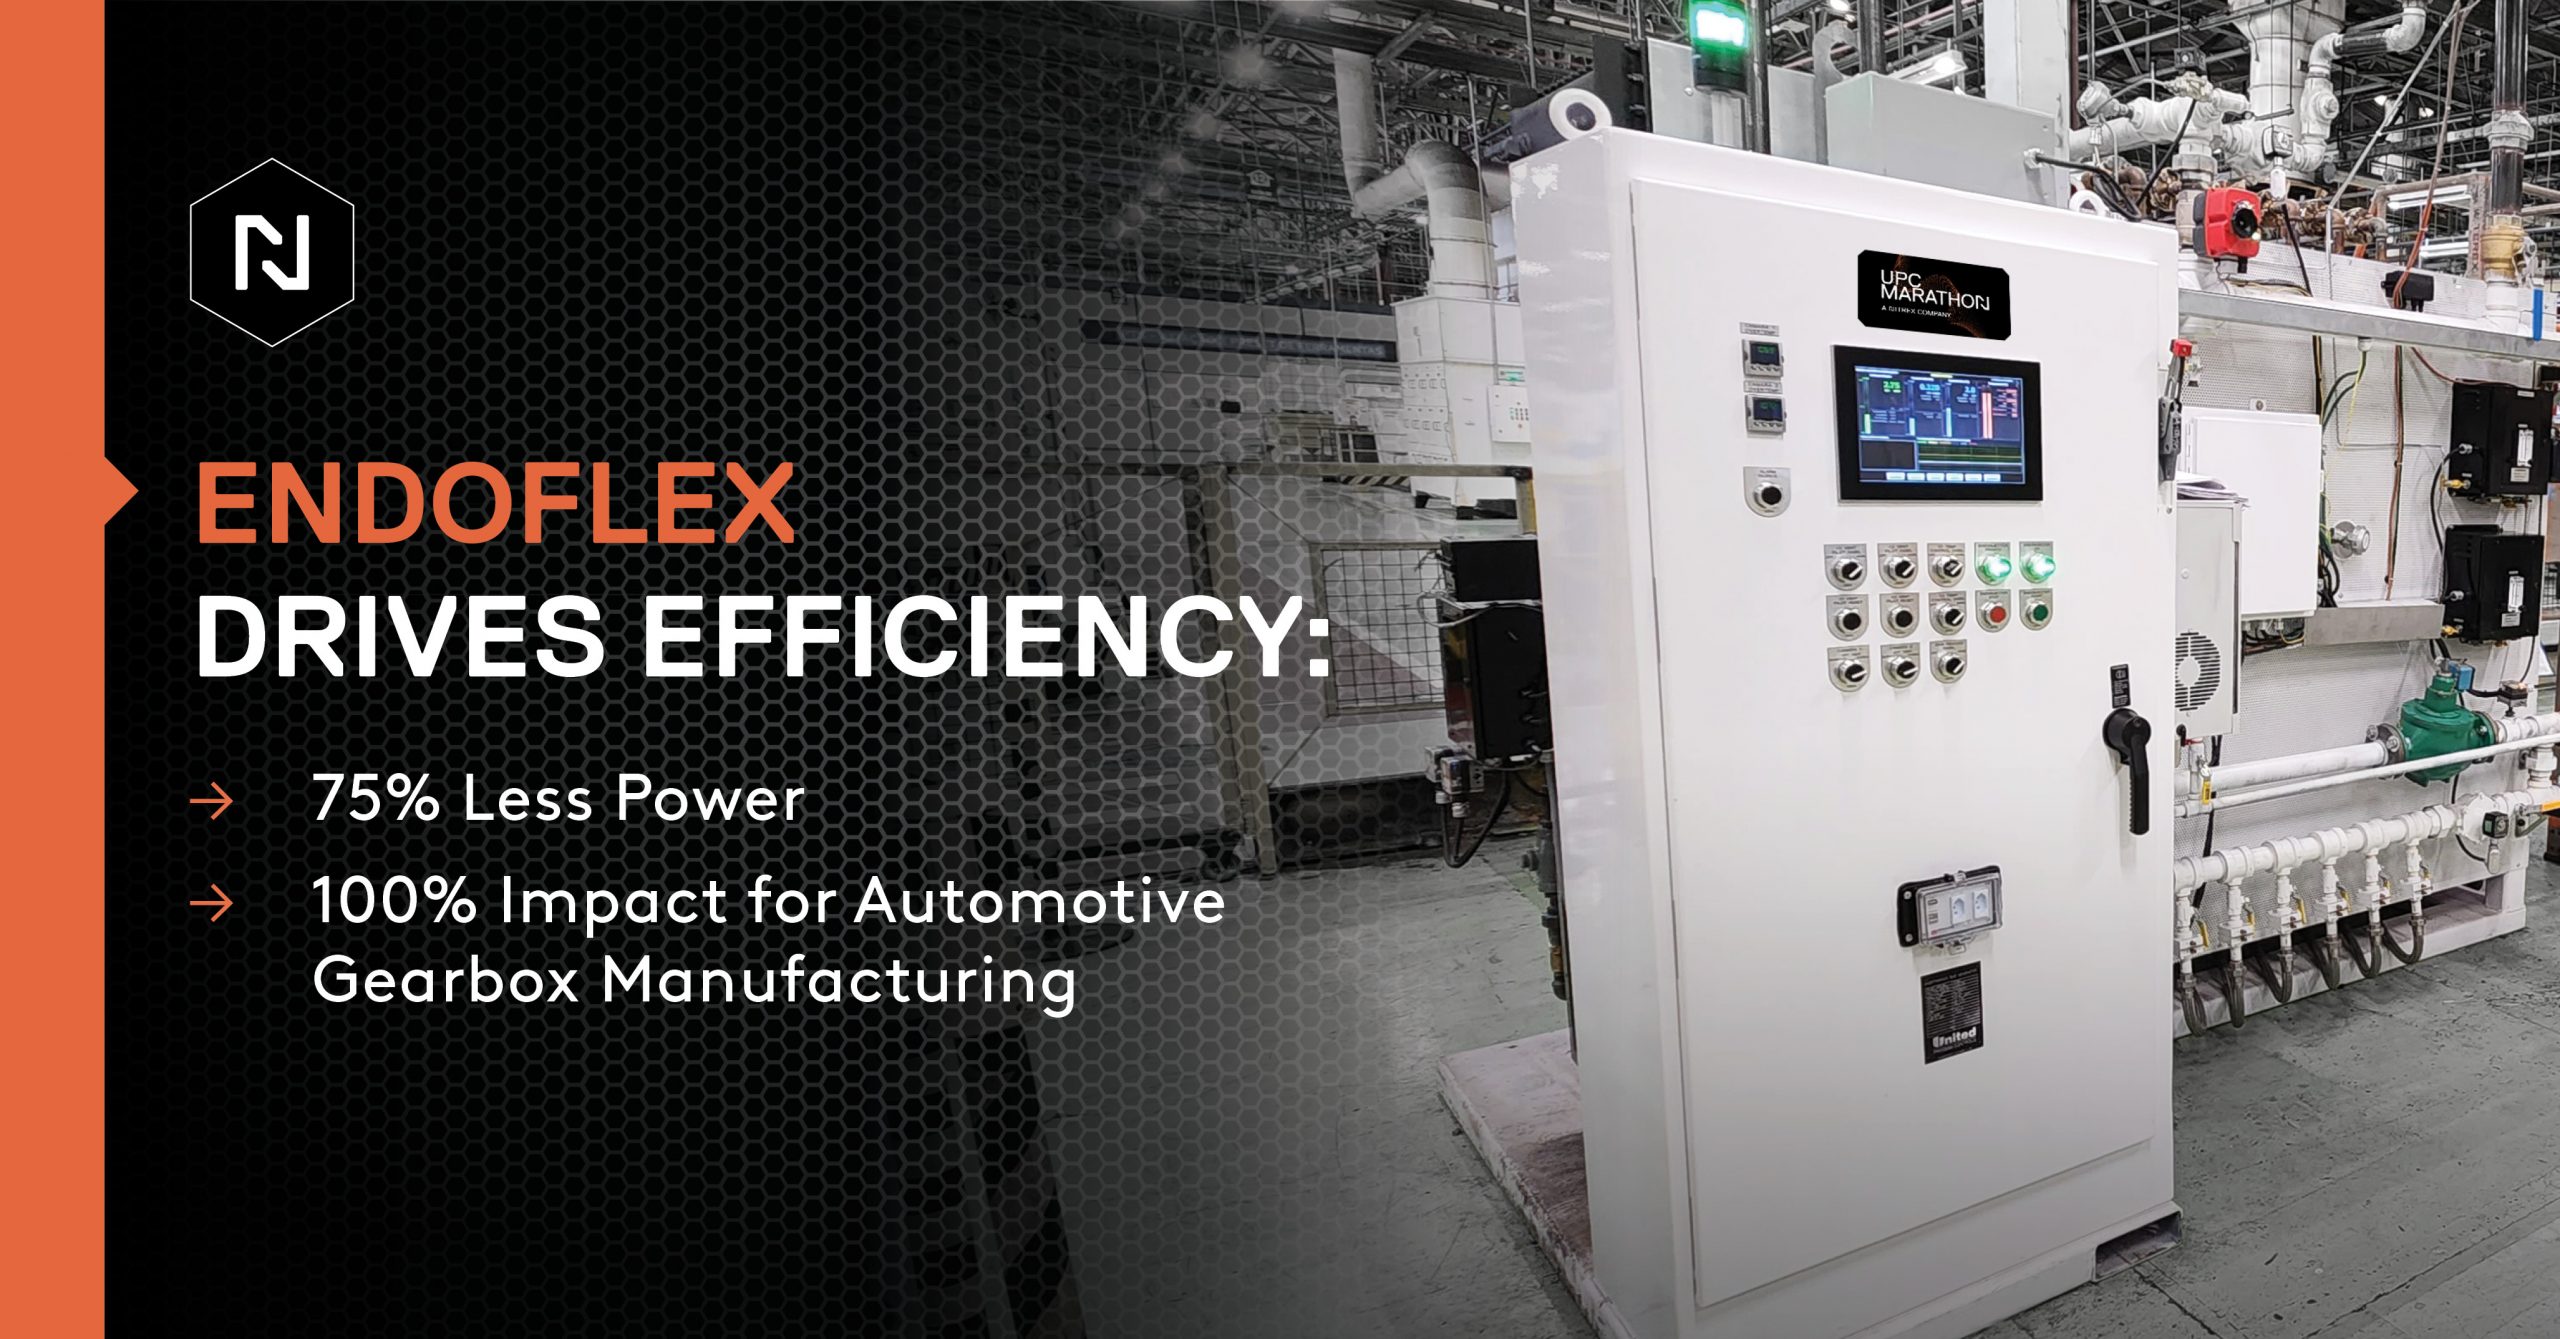 Automotive Company Orders Second Endoflex Generator From UPC-Marathon, a Nitrex Company